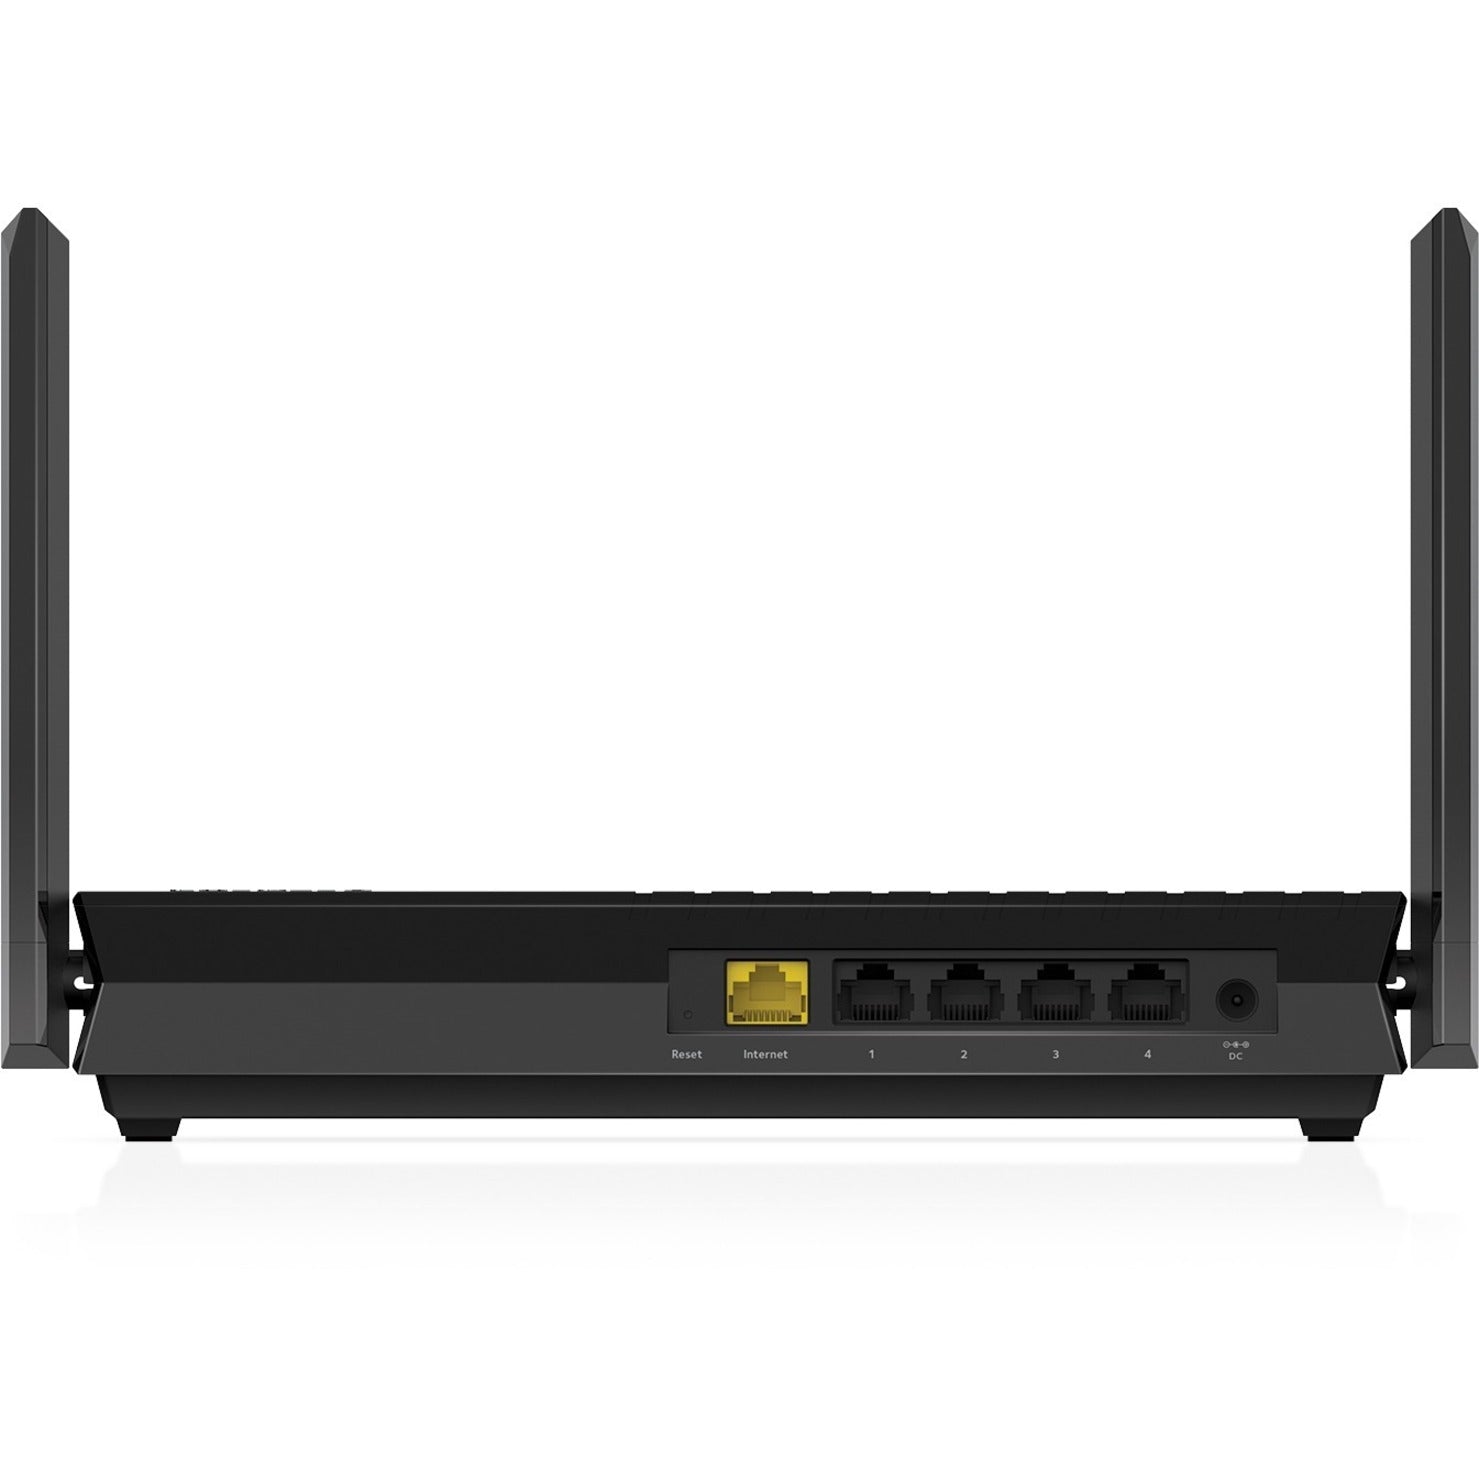 Netgear RAX20-100NAS Nighthawk 4-Stream WiFi 6 Router, AX1800 Wireless Router with Gigabit Ethernet